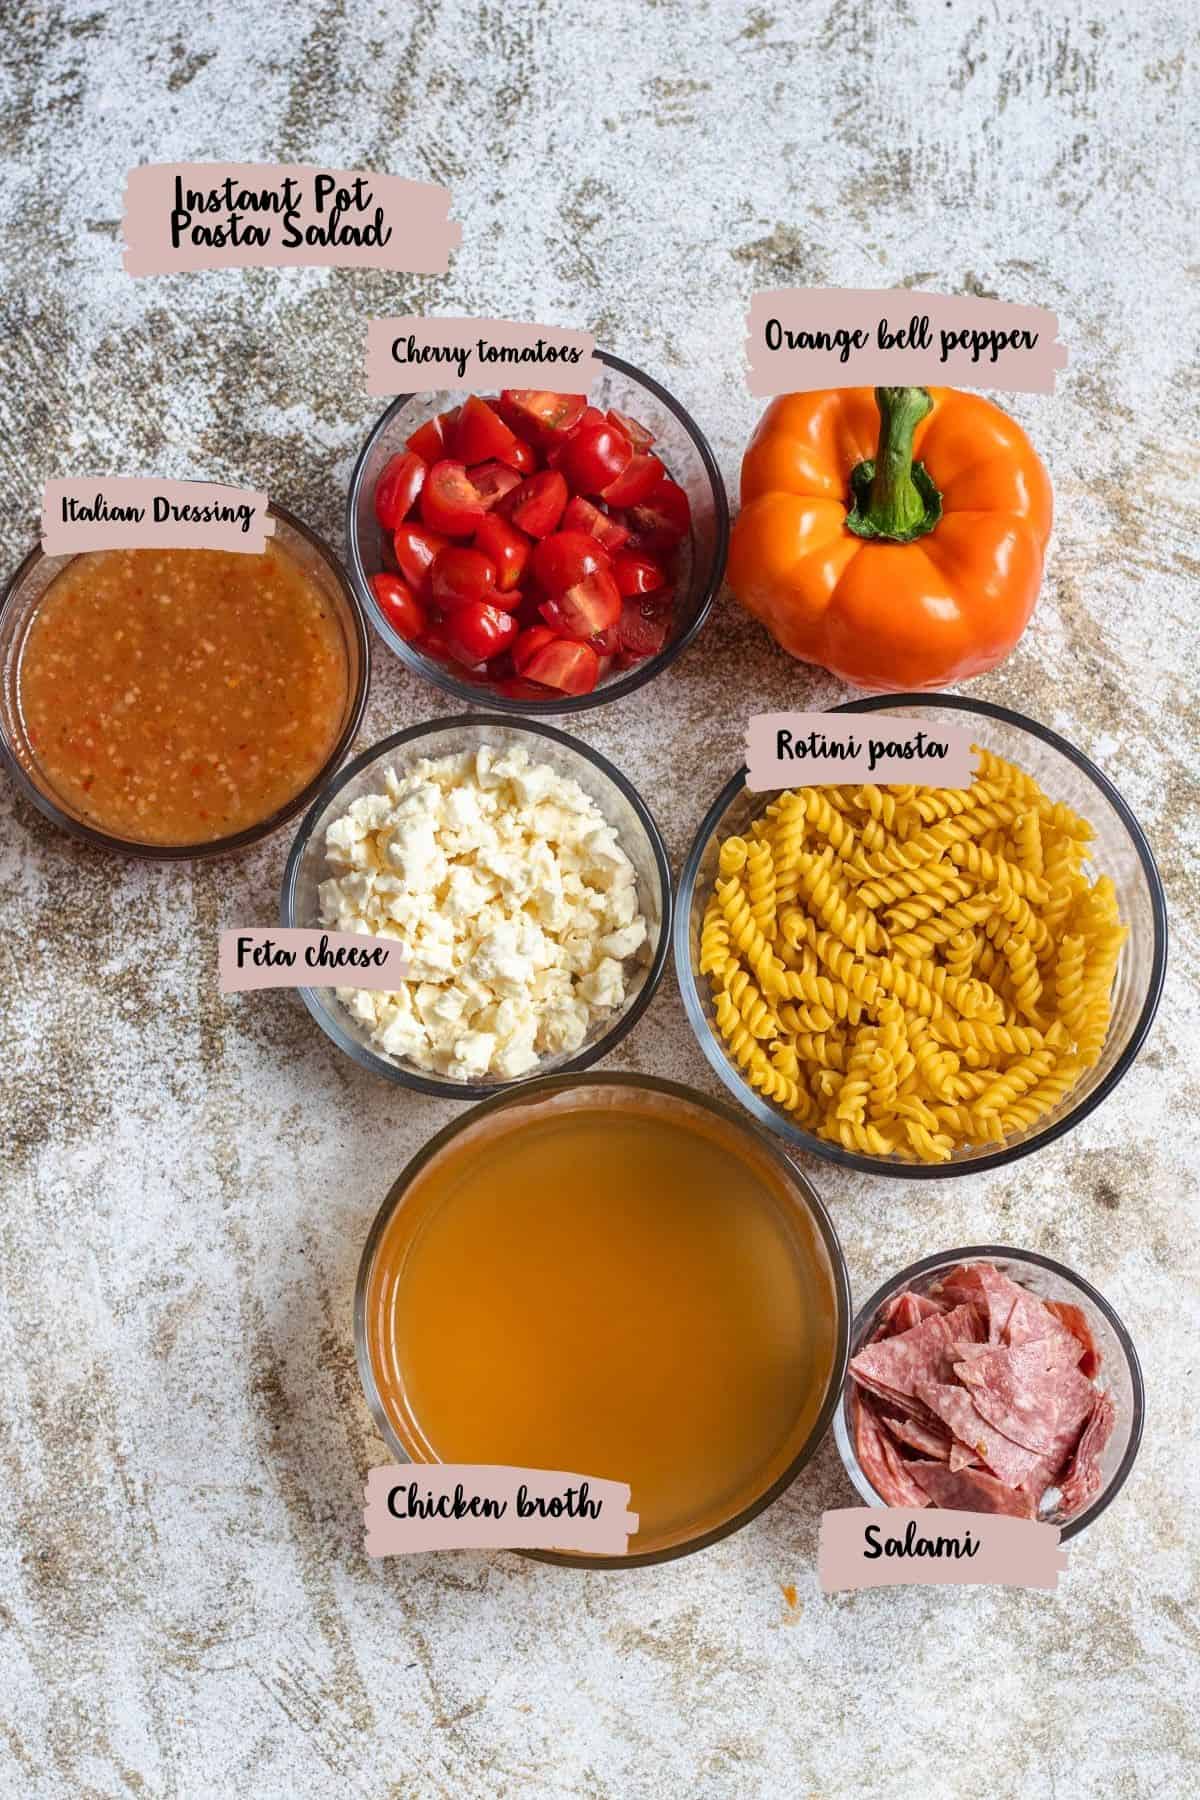 Measured ingredients to prepare Instant Pot Pasta Salad.